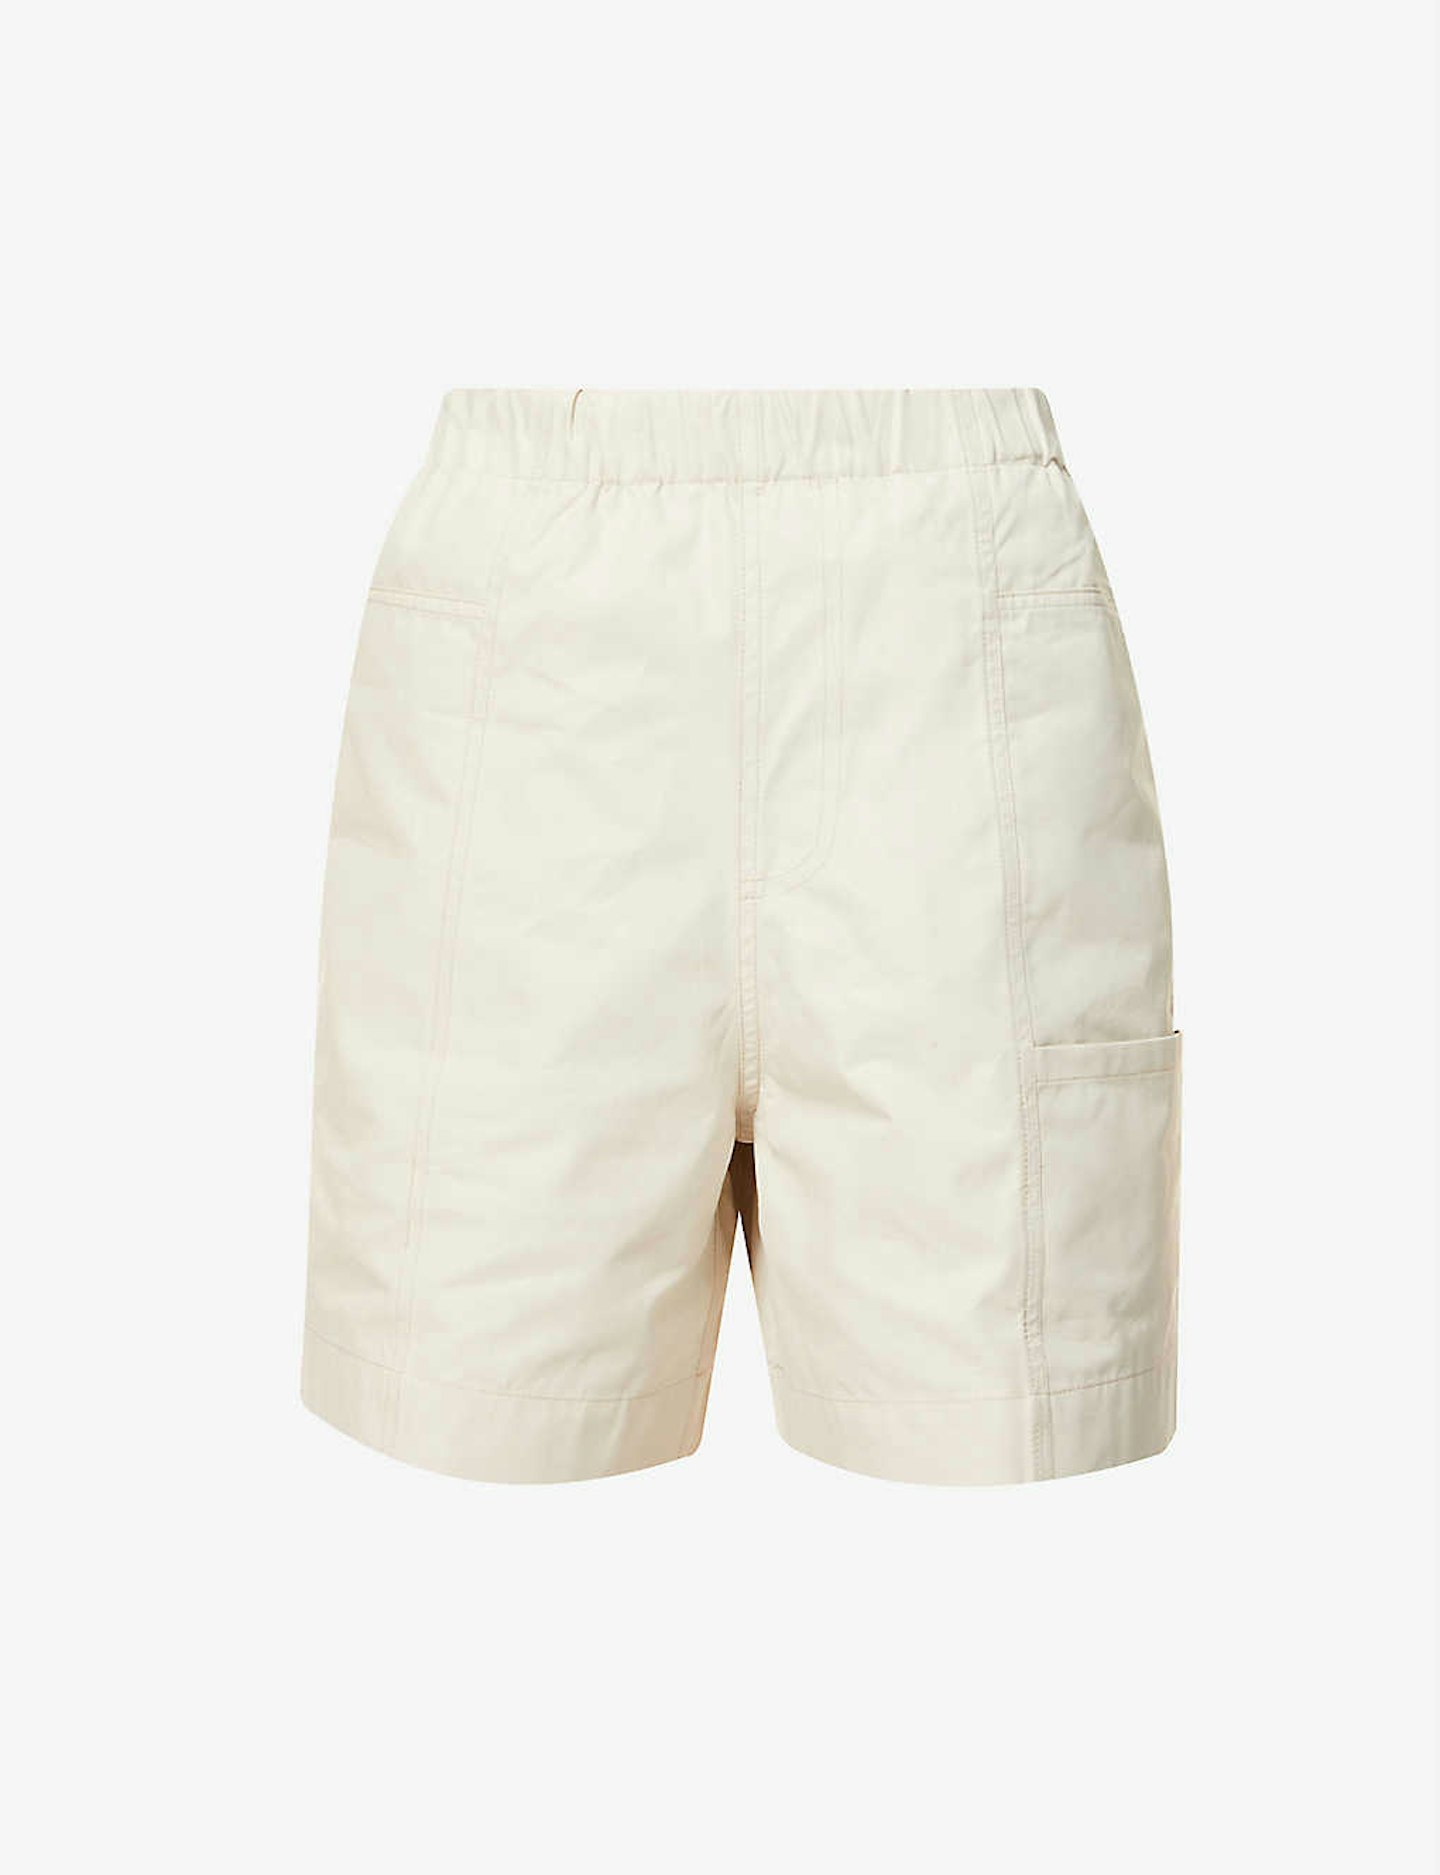 RILEY STUDIO, Organic cotton pocket shorts, £165